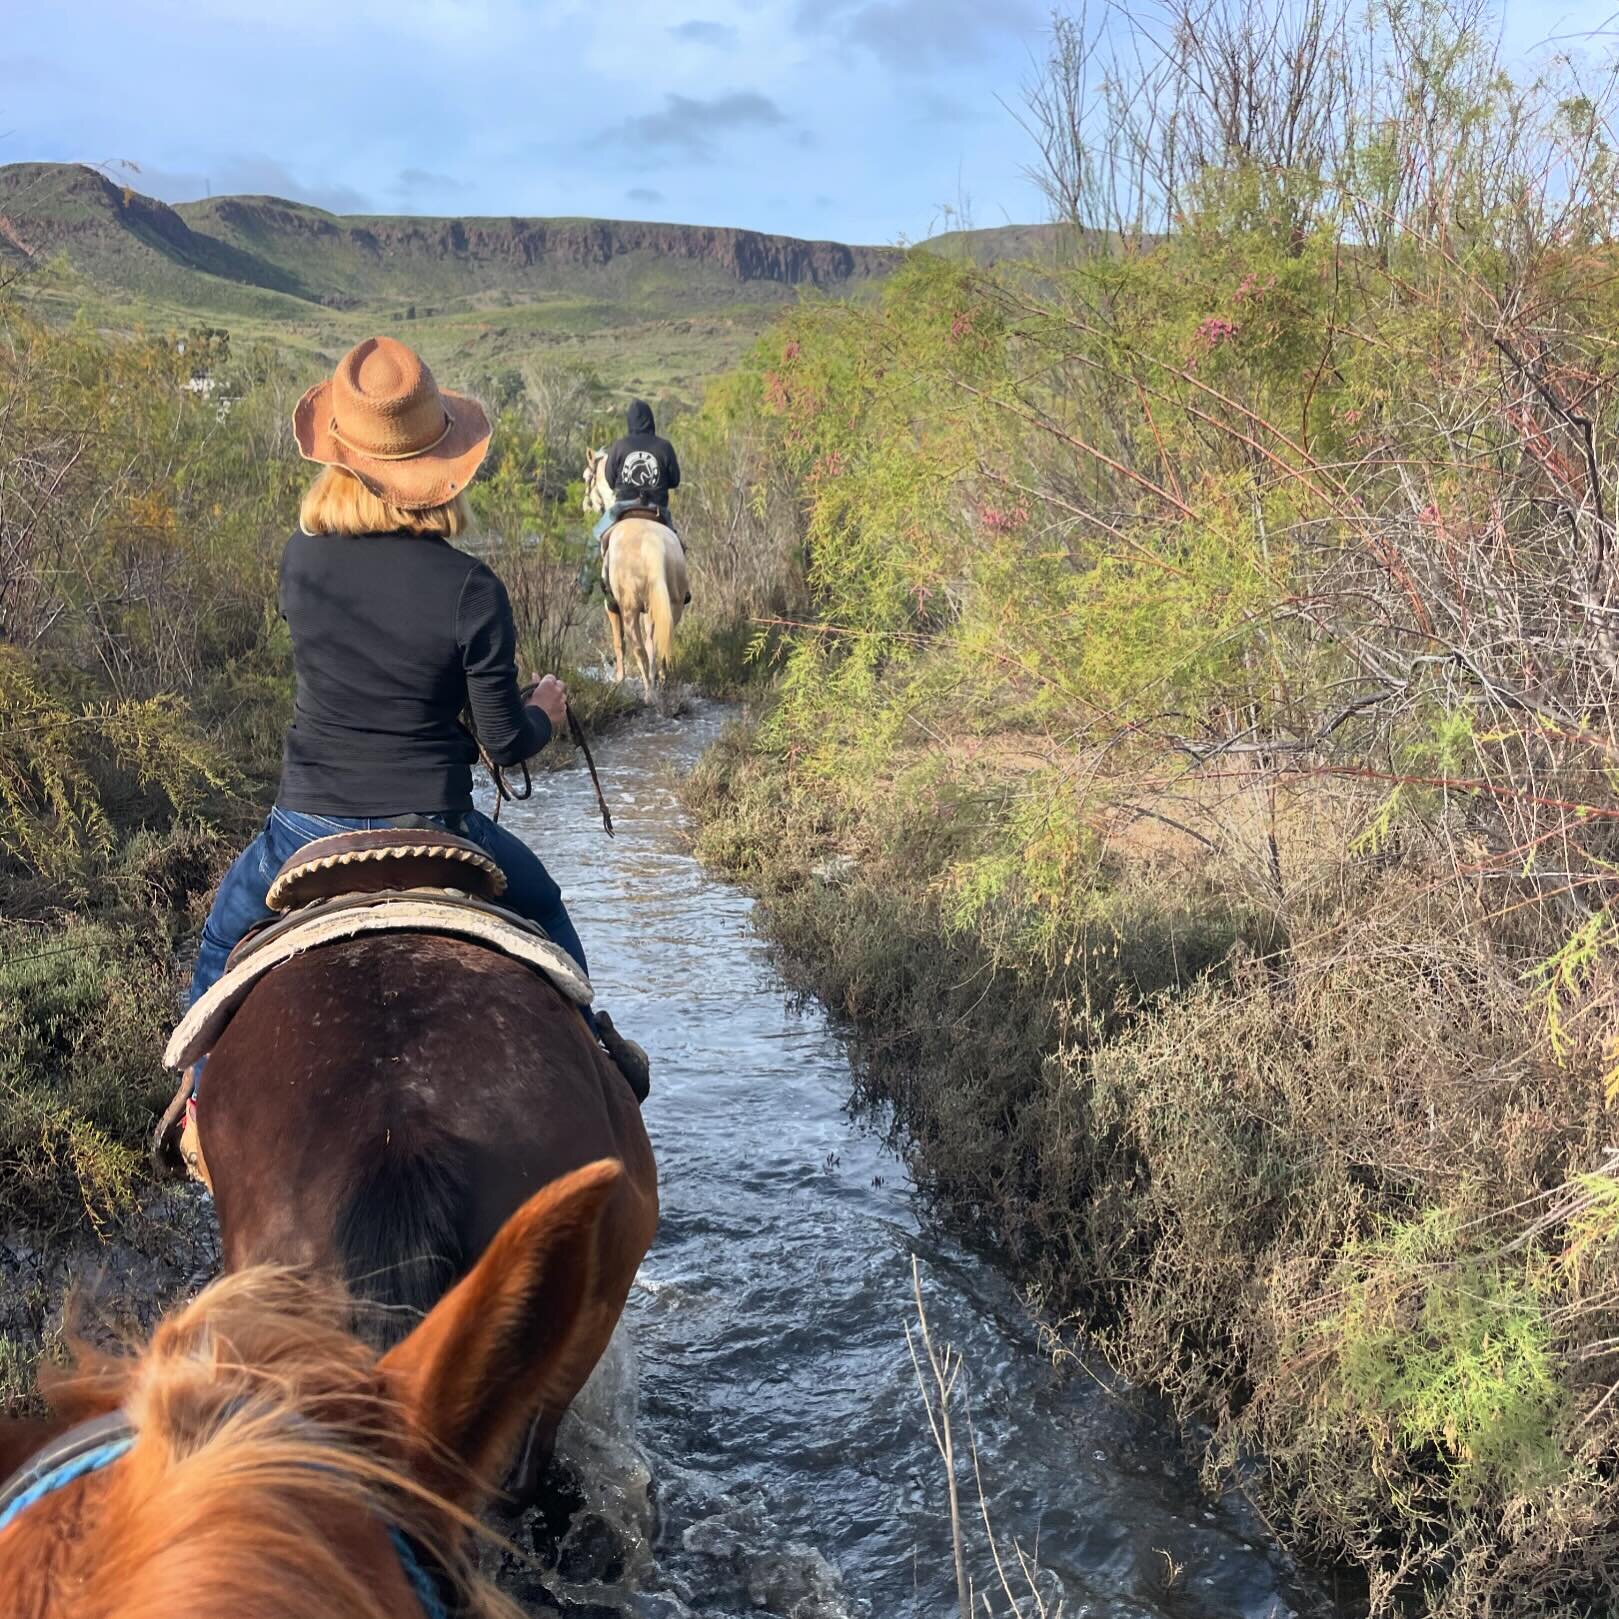 Hola amigos! Still need to make some plans for #springbreak ? Why not come to Baja and come riding with us? Fun for the whole family! 🤠🇲🇽🐴

#horsesbyjose #bajacaliforniamexico #ensenada #getoutside #horseriding #horsebackadventures #horsebackridi